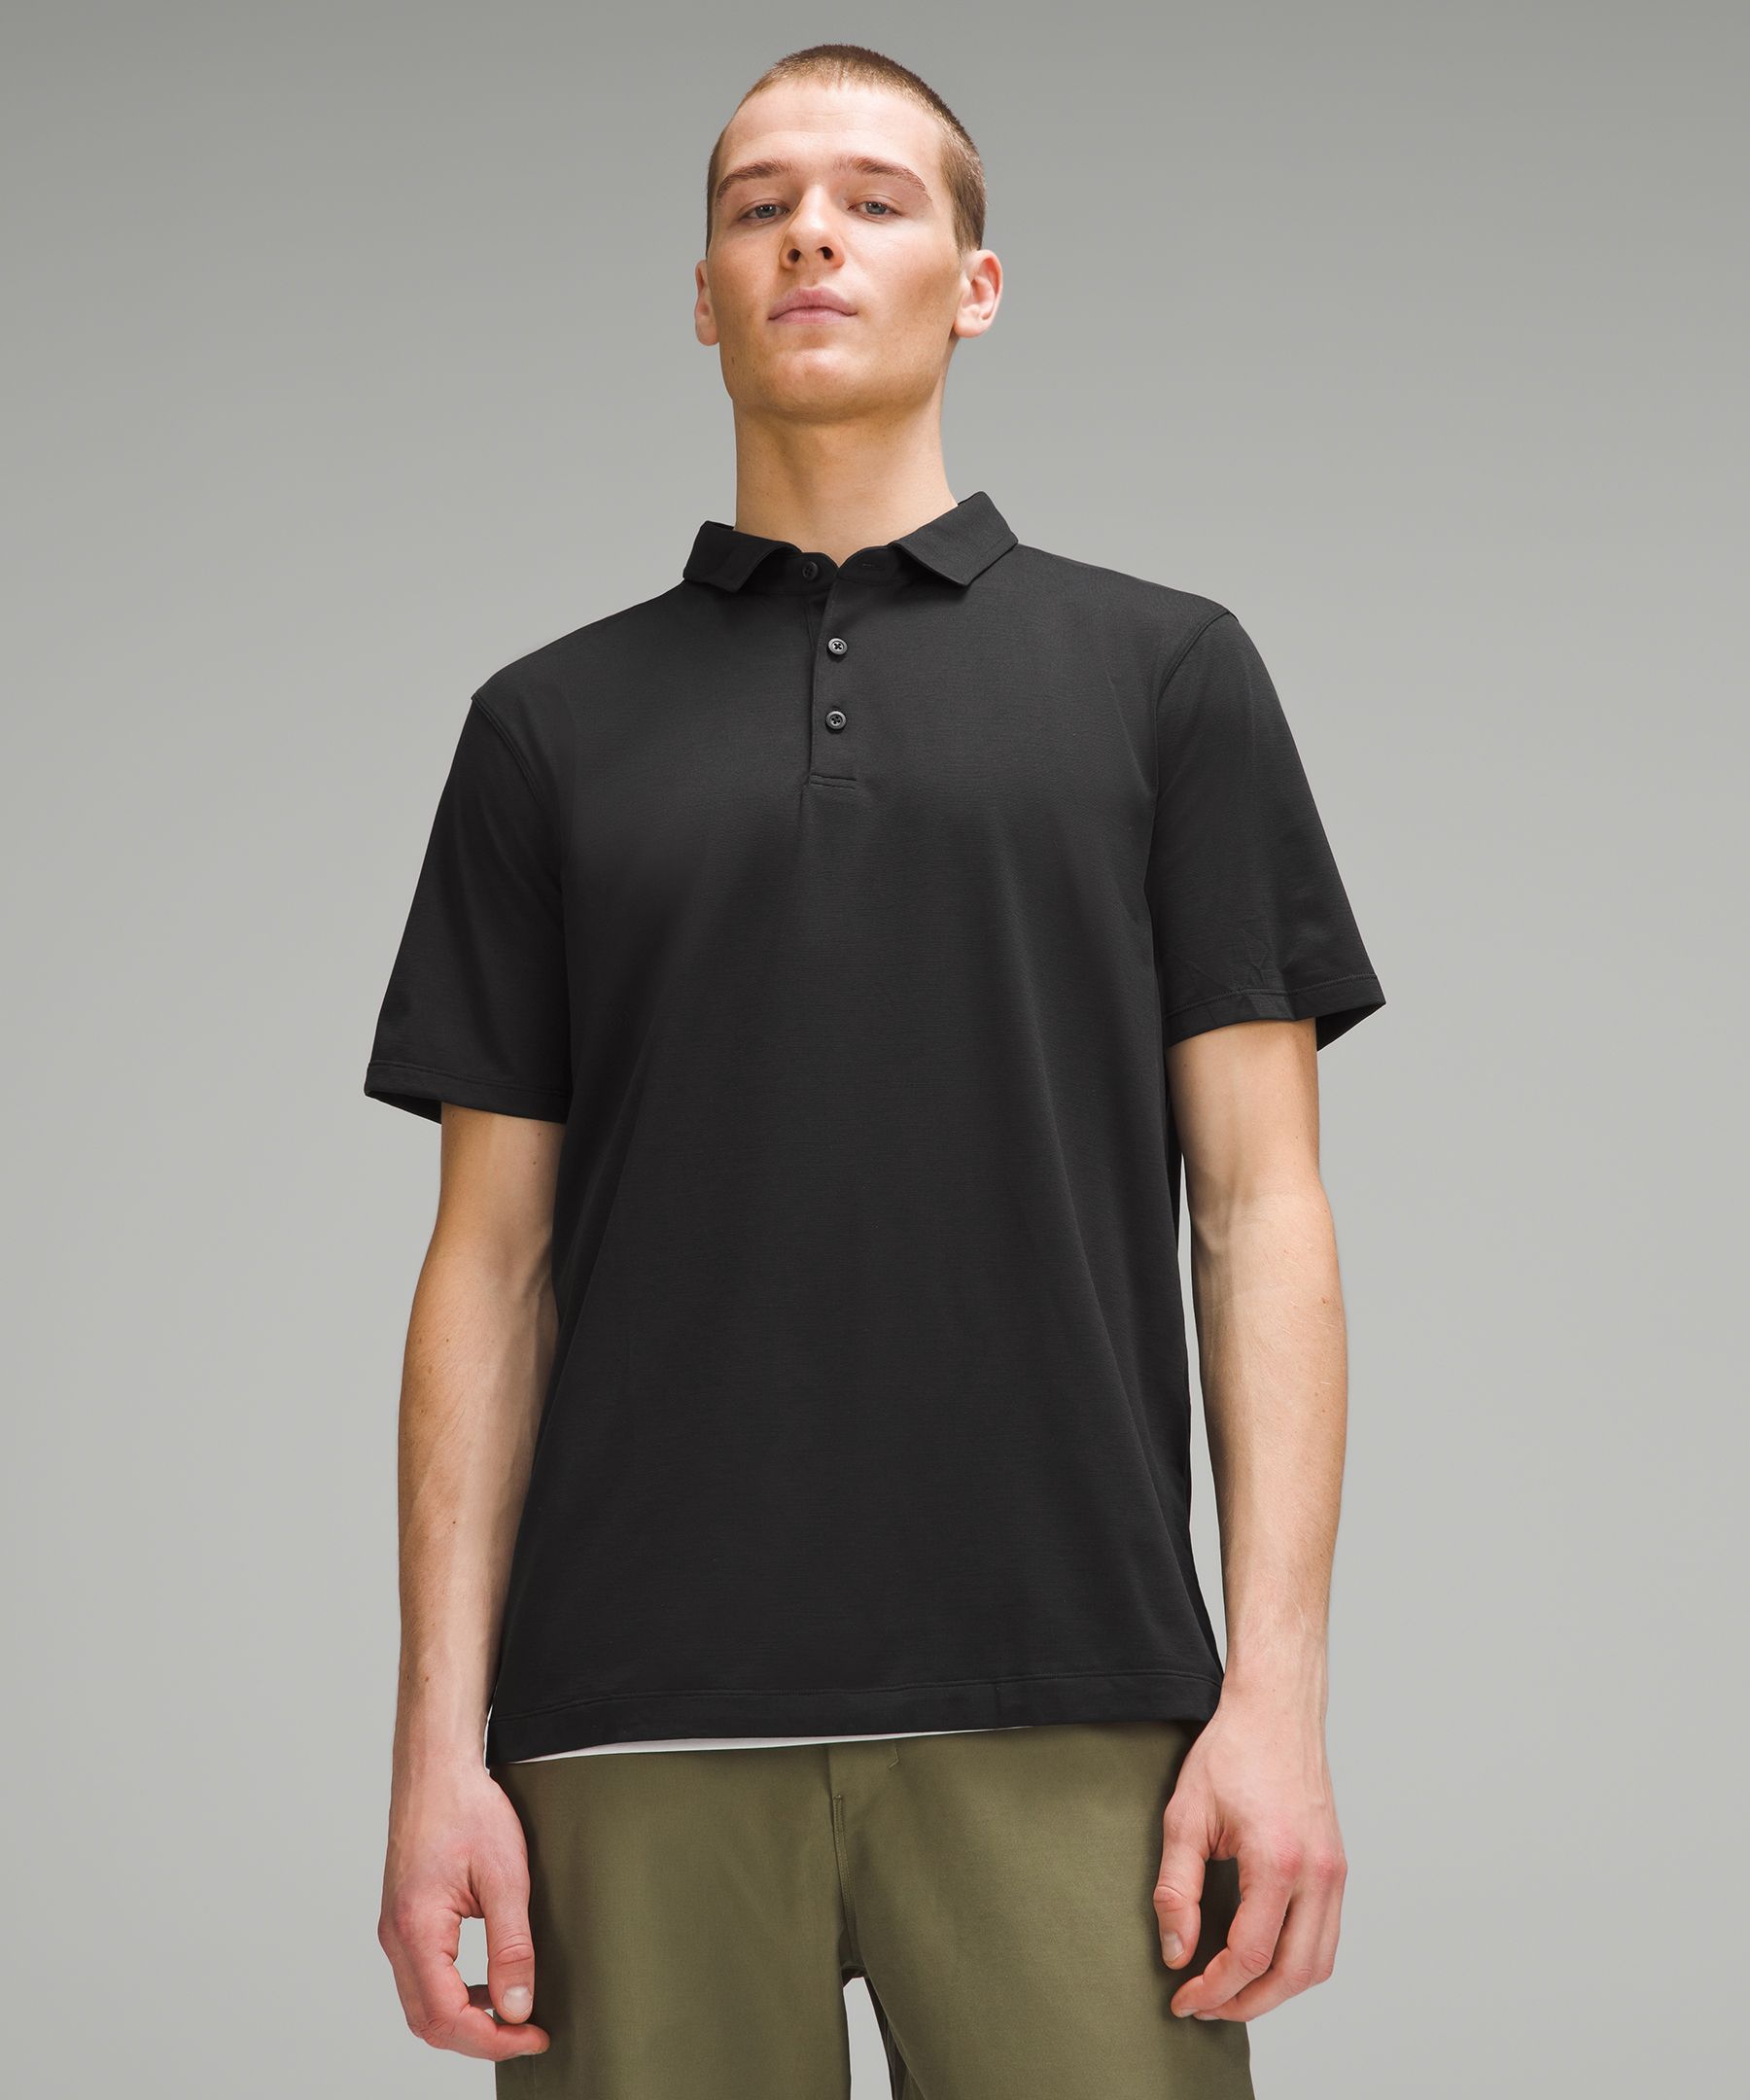 Lululemon and Evolution Short-Sleeve Polo Shirt - Black/Neutral - Size Xs